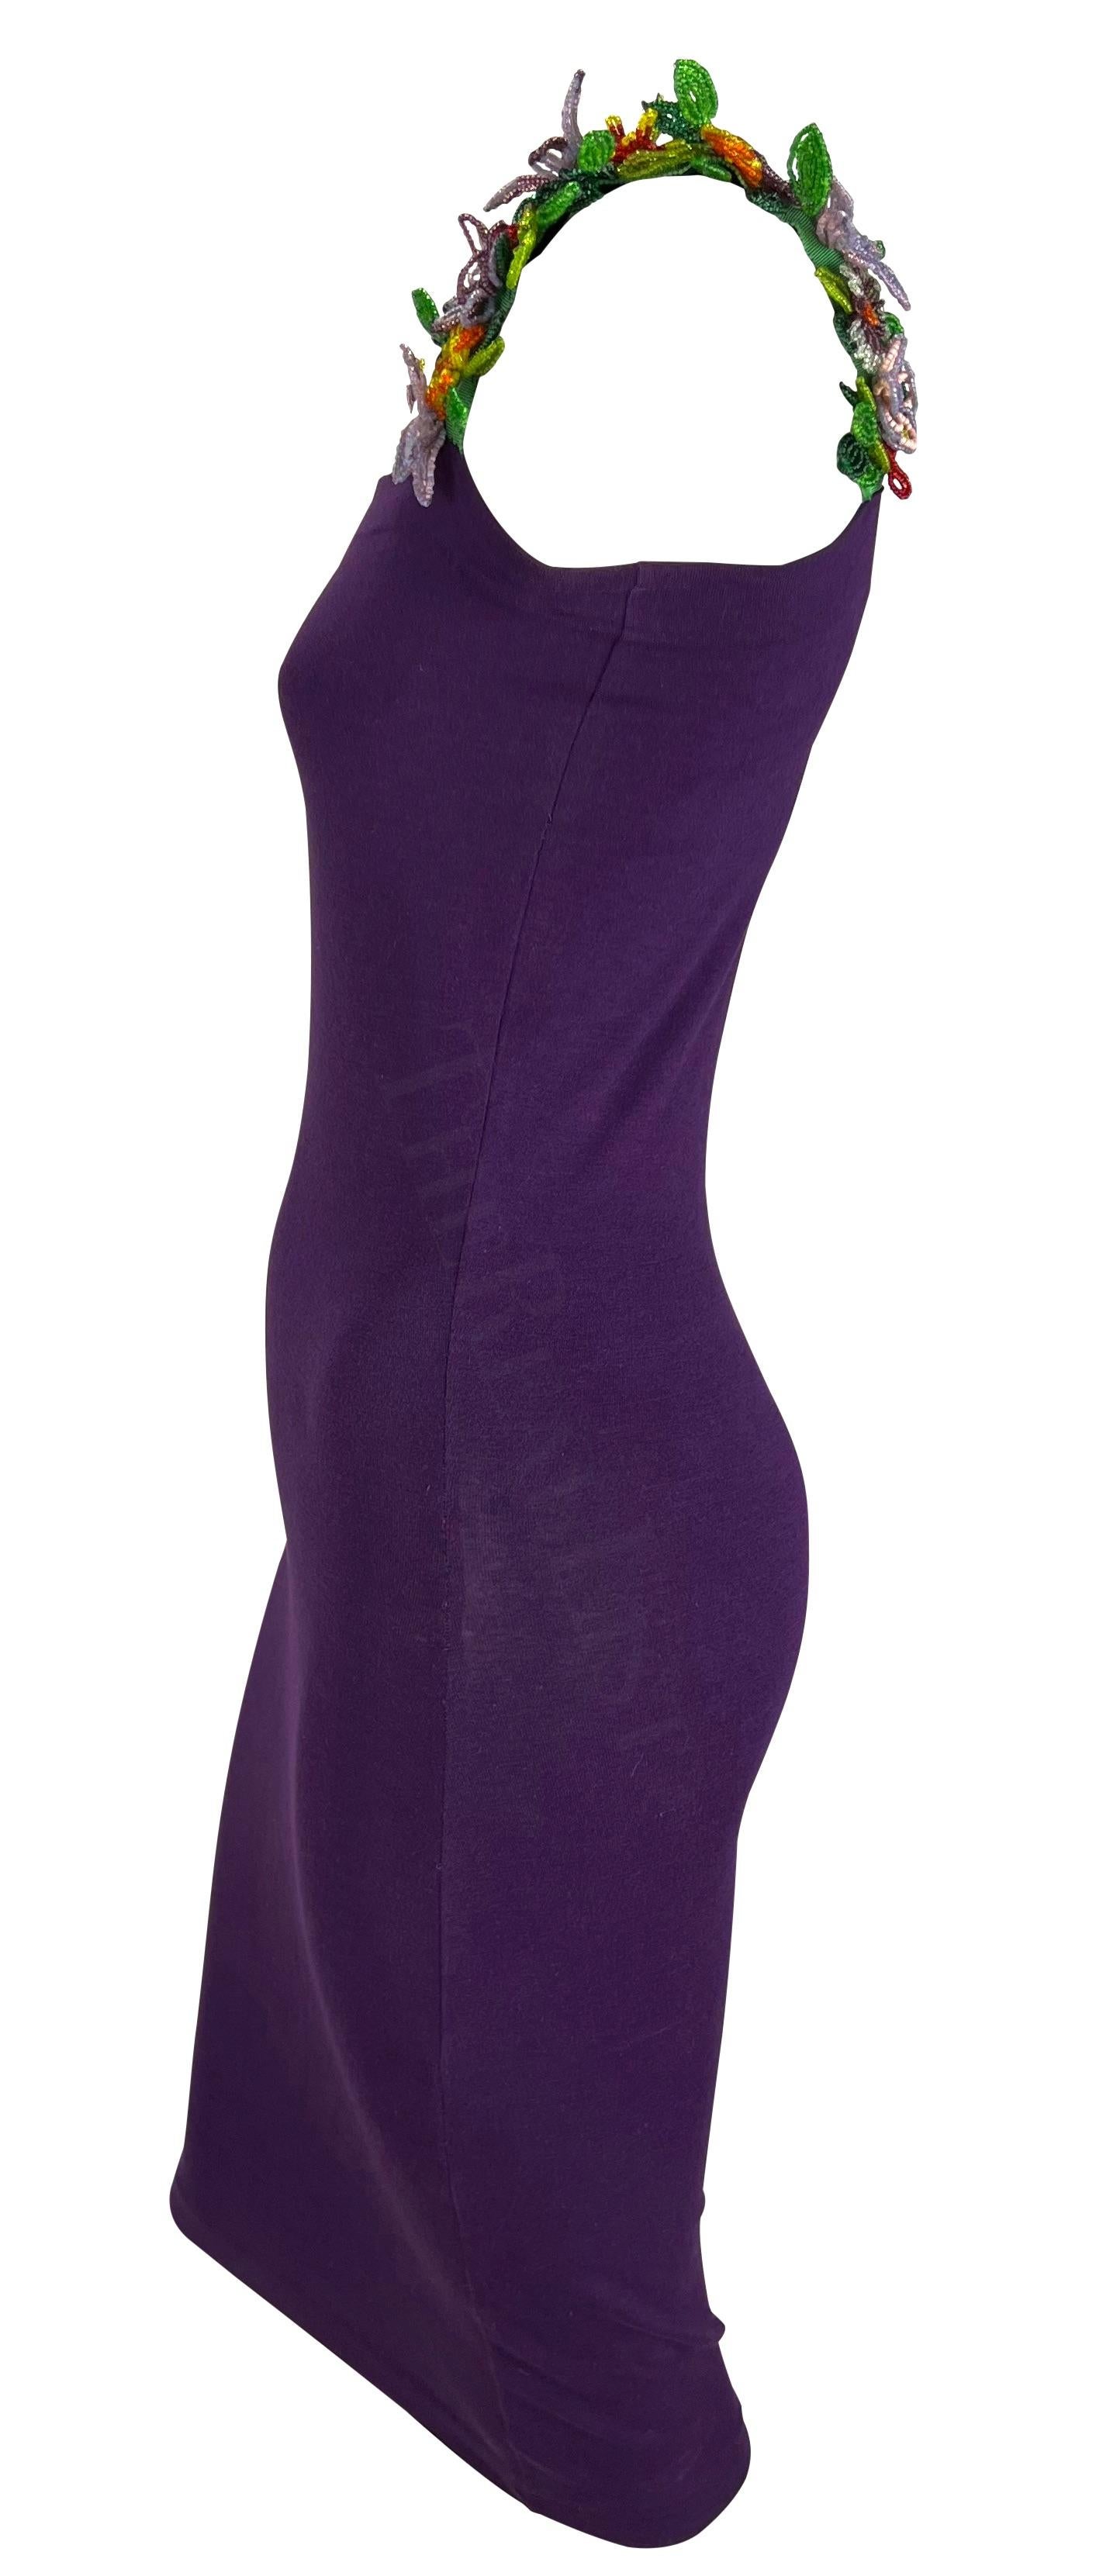 S/S 1992 Dolce & Gabbana Purple Mini Dress Floral Beaded Straps For Sale 1